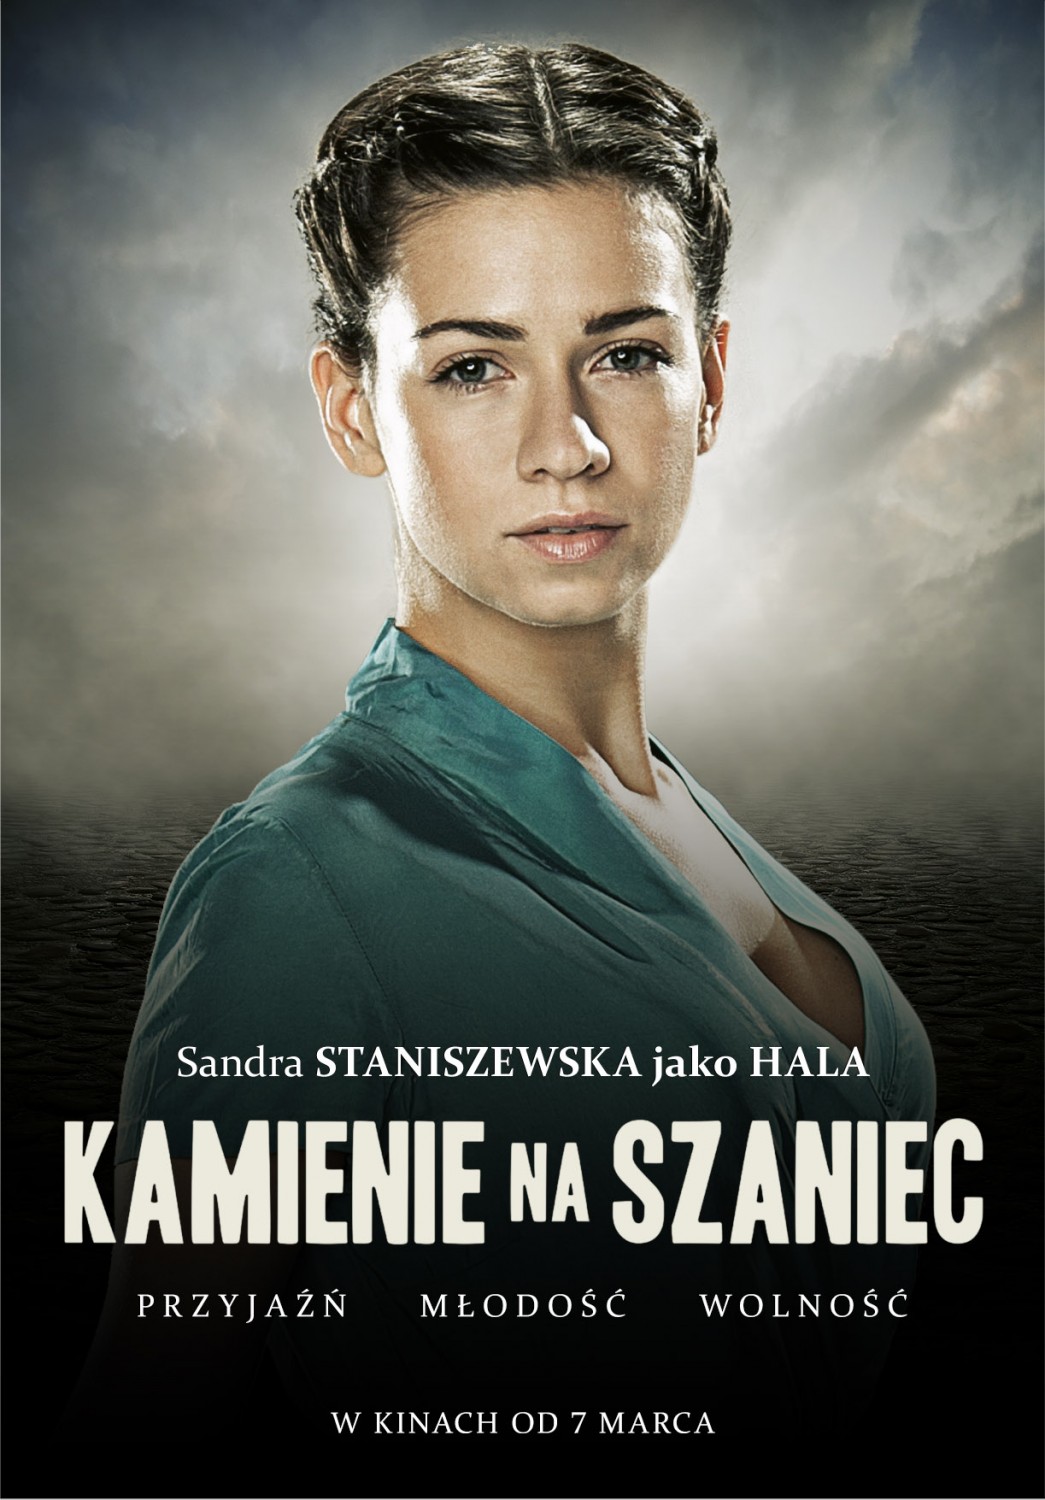 Extra Large Movie Poster Image for Kamienie na szaniec (#4 of 8)